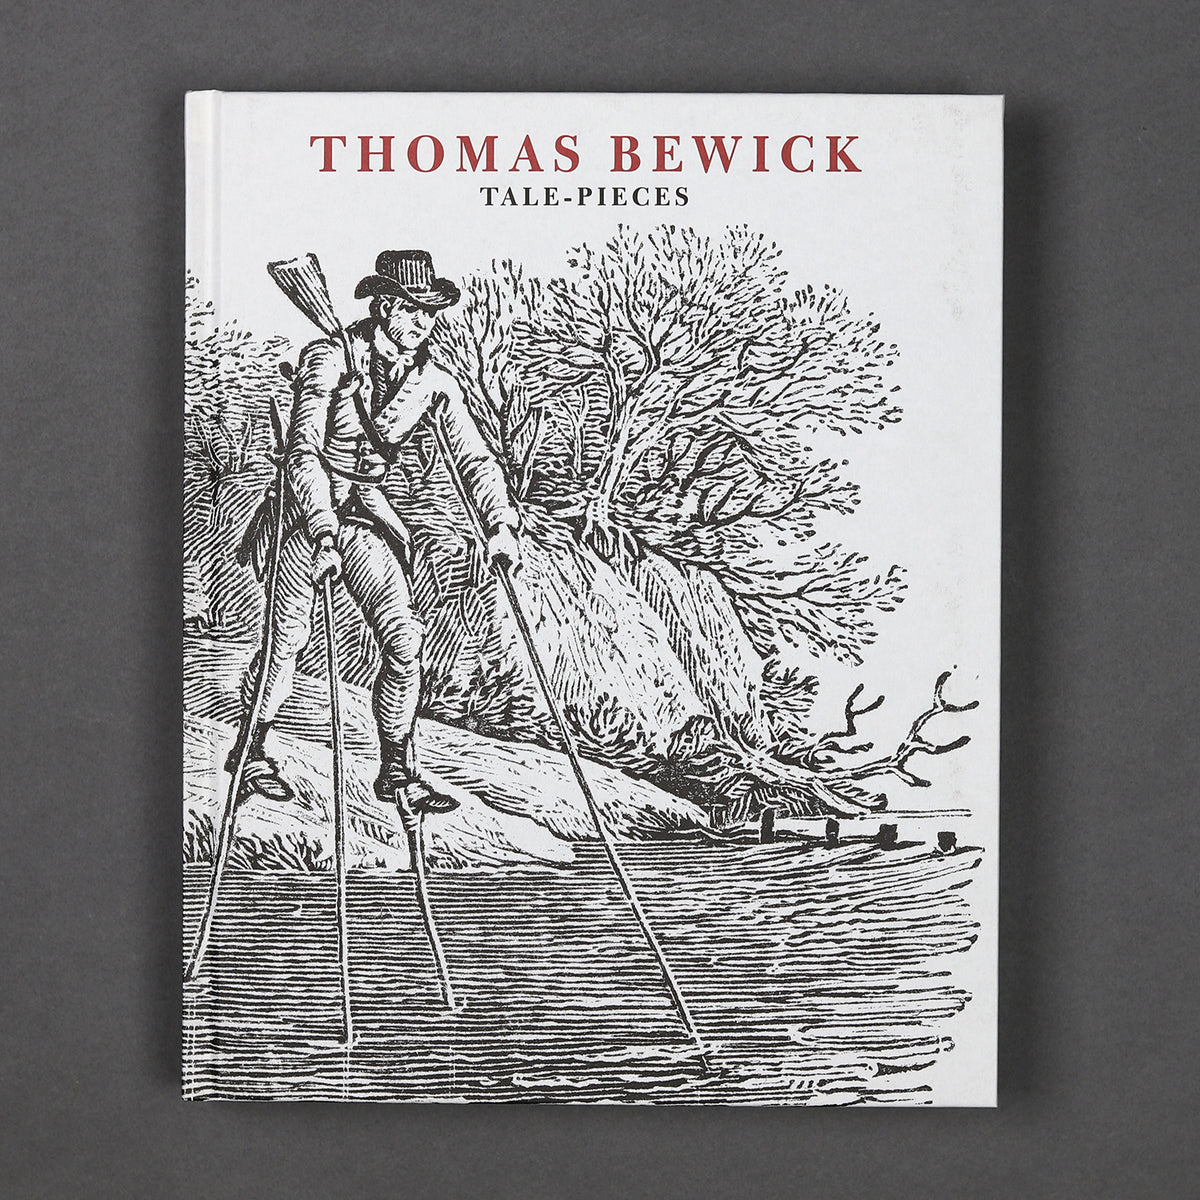 Thomas Bewick: Tale-pieces